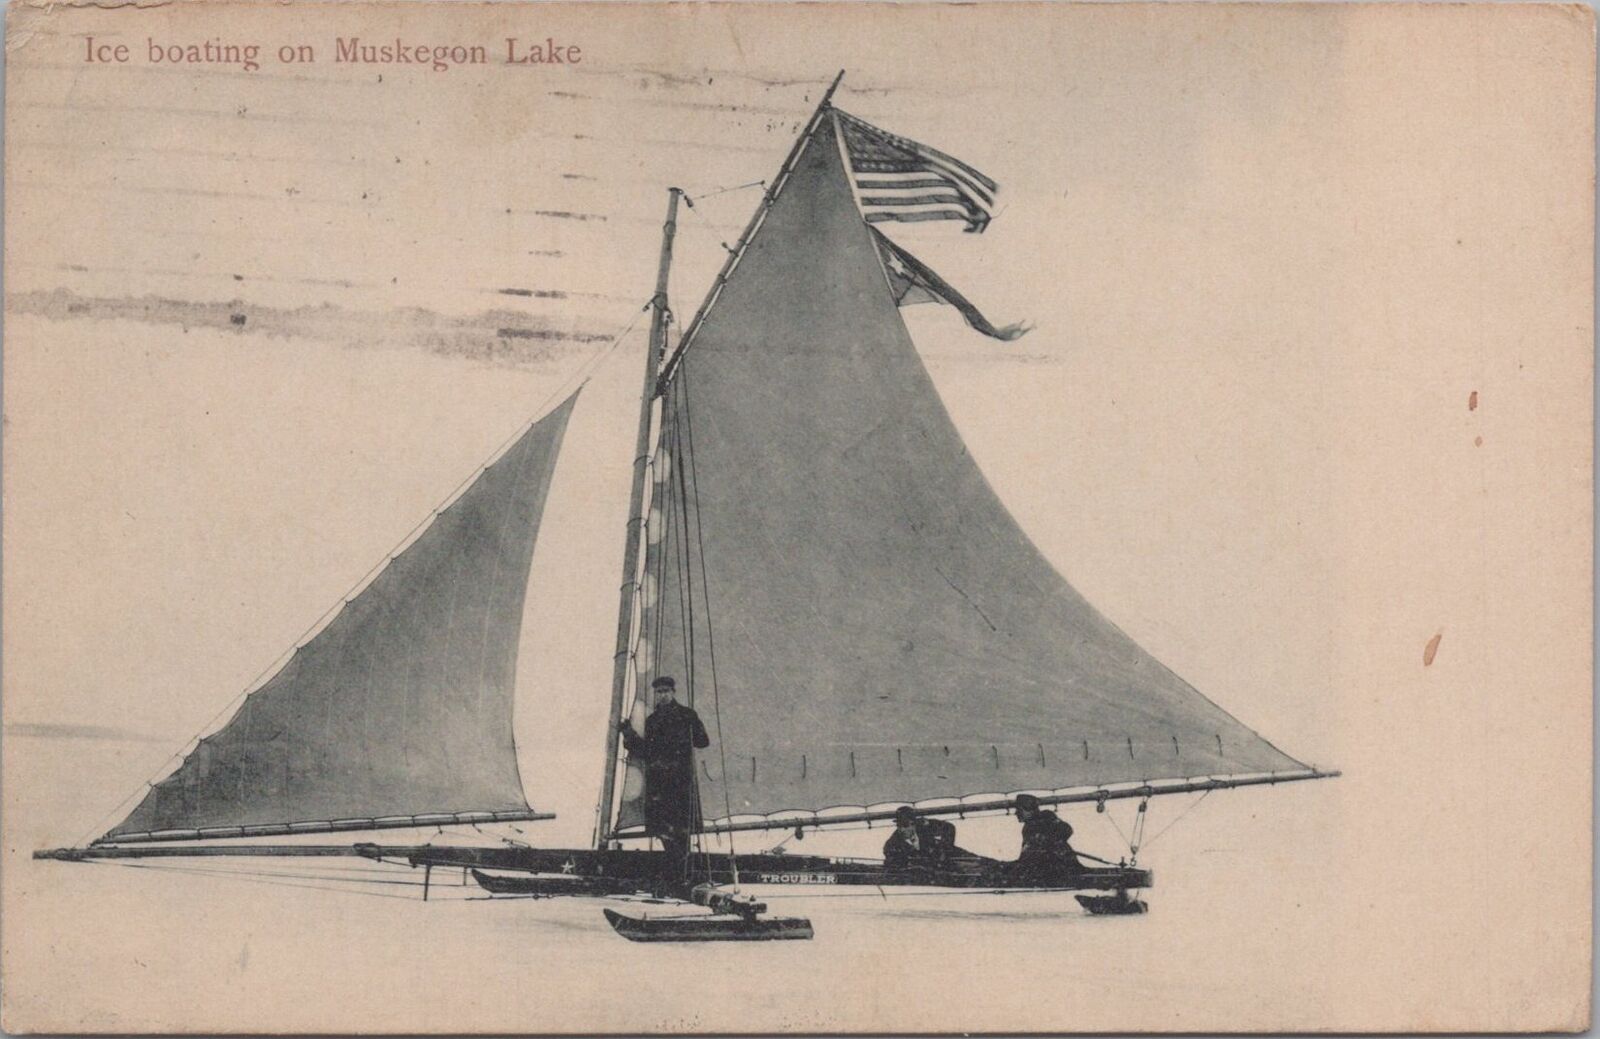 Troubler Ice Boating on Muskegon Lake Michigan 1911 Photo Postcard